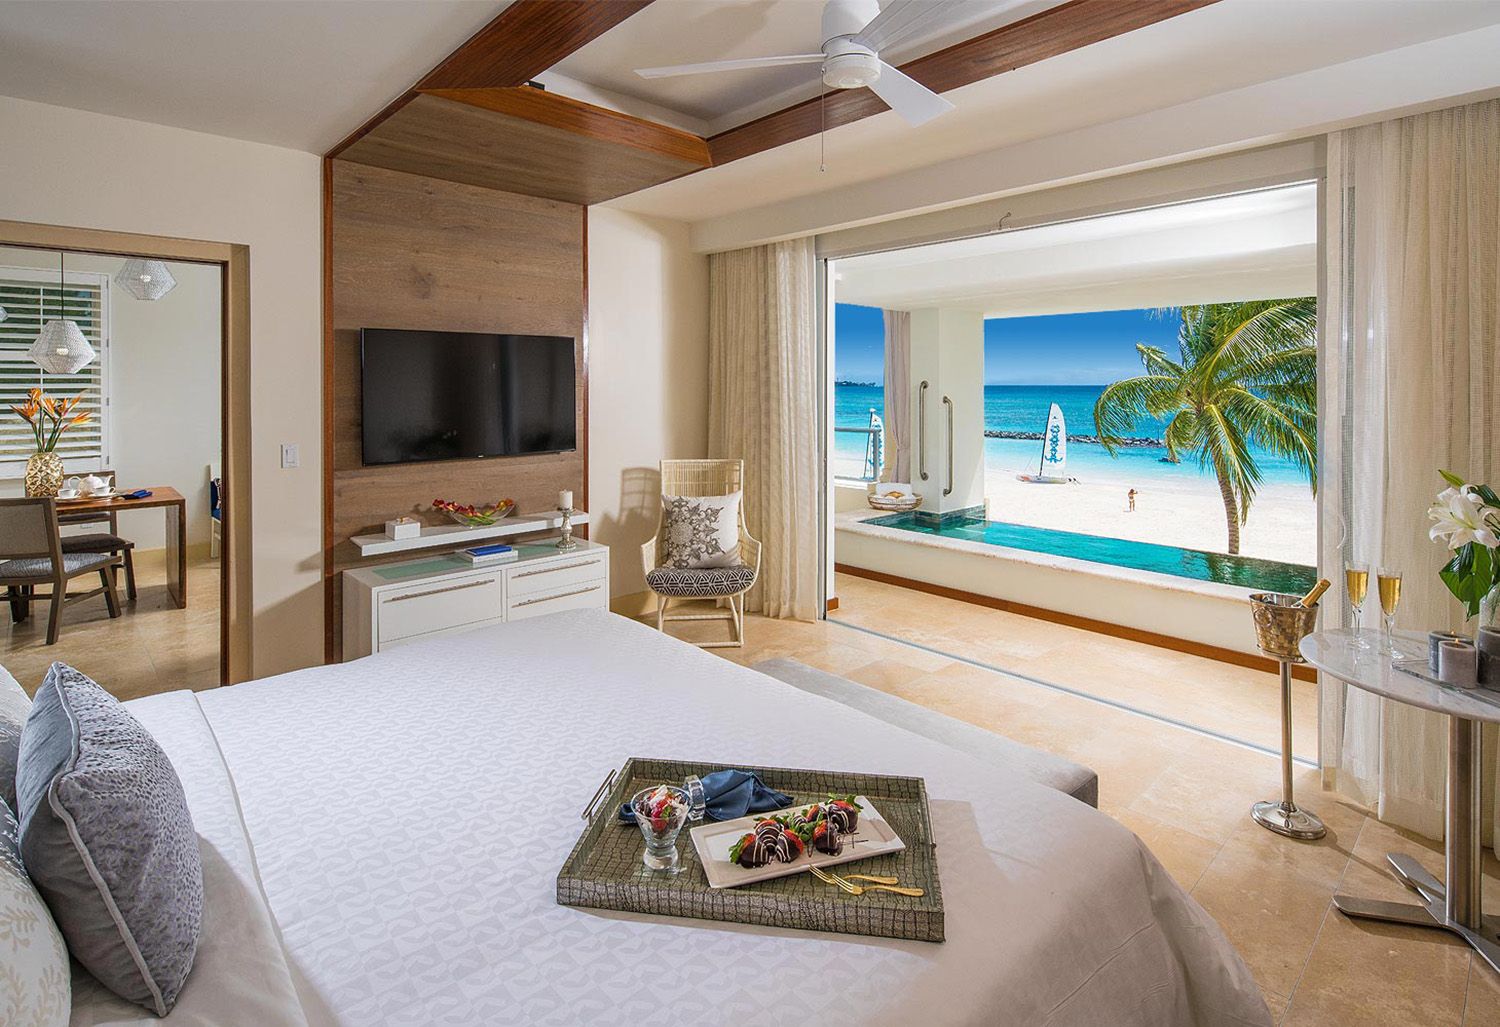 Sandals Royal Barbados honeymoon suite